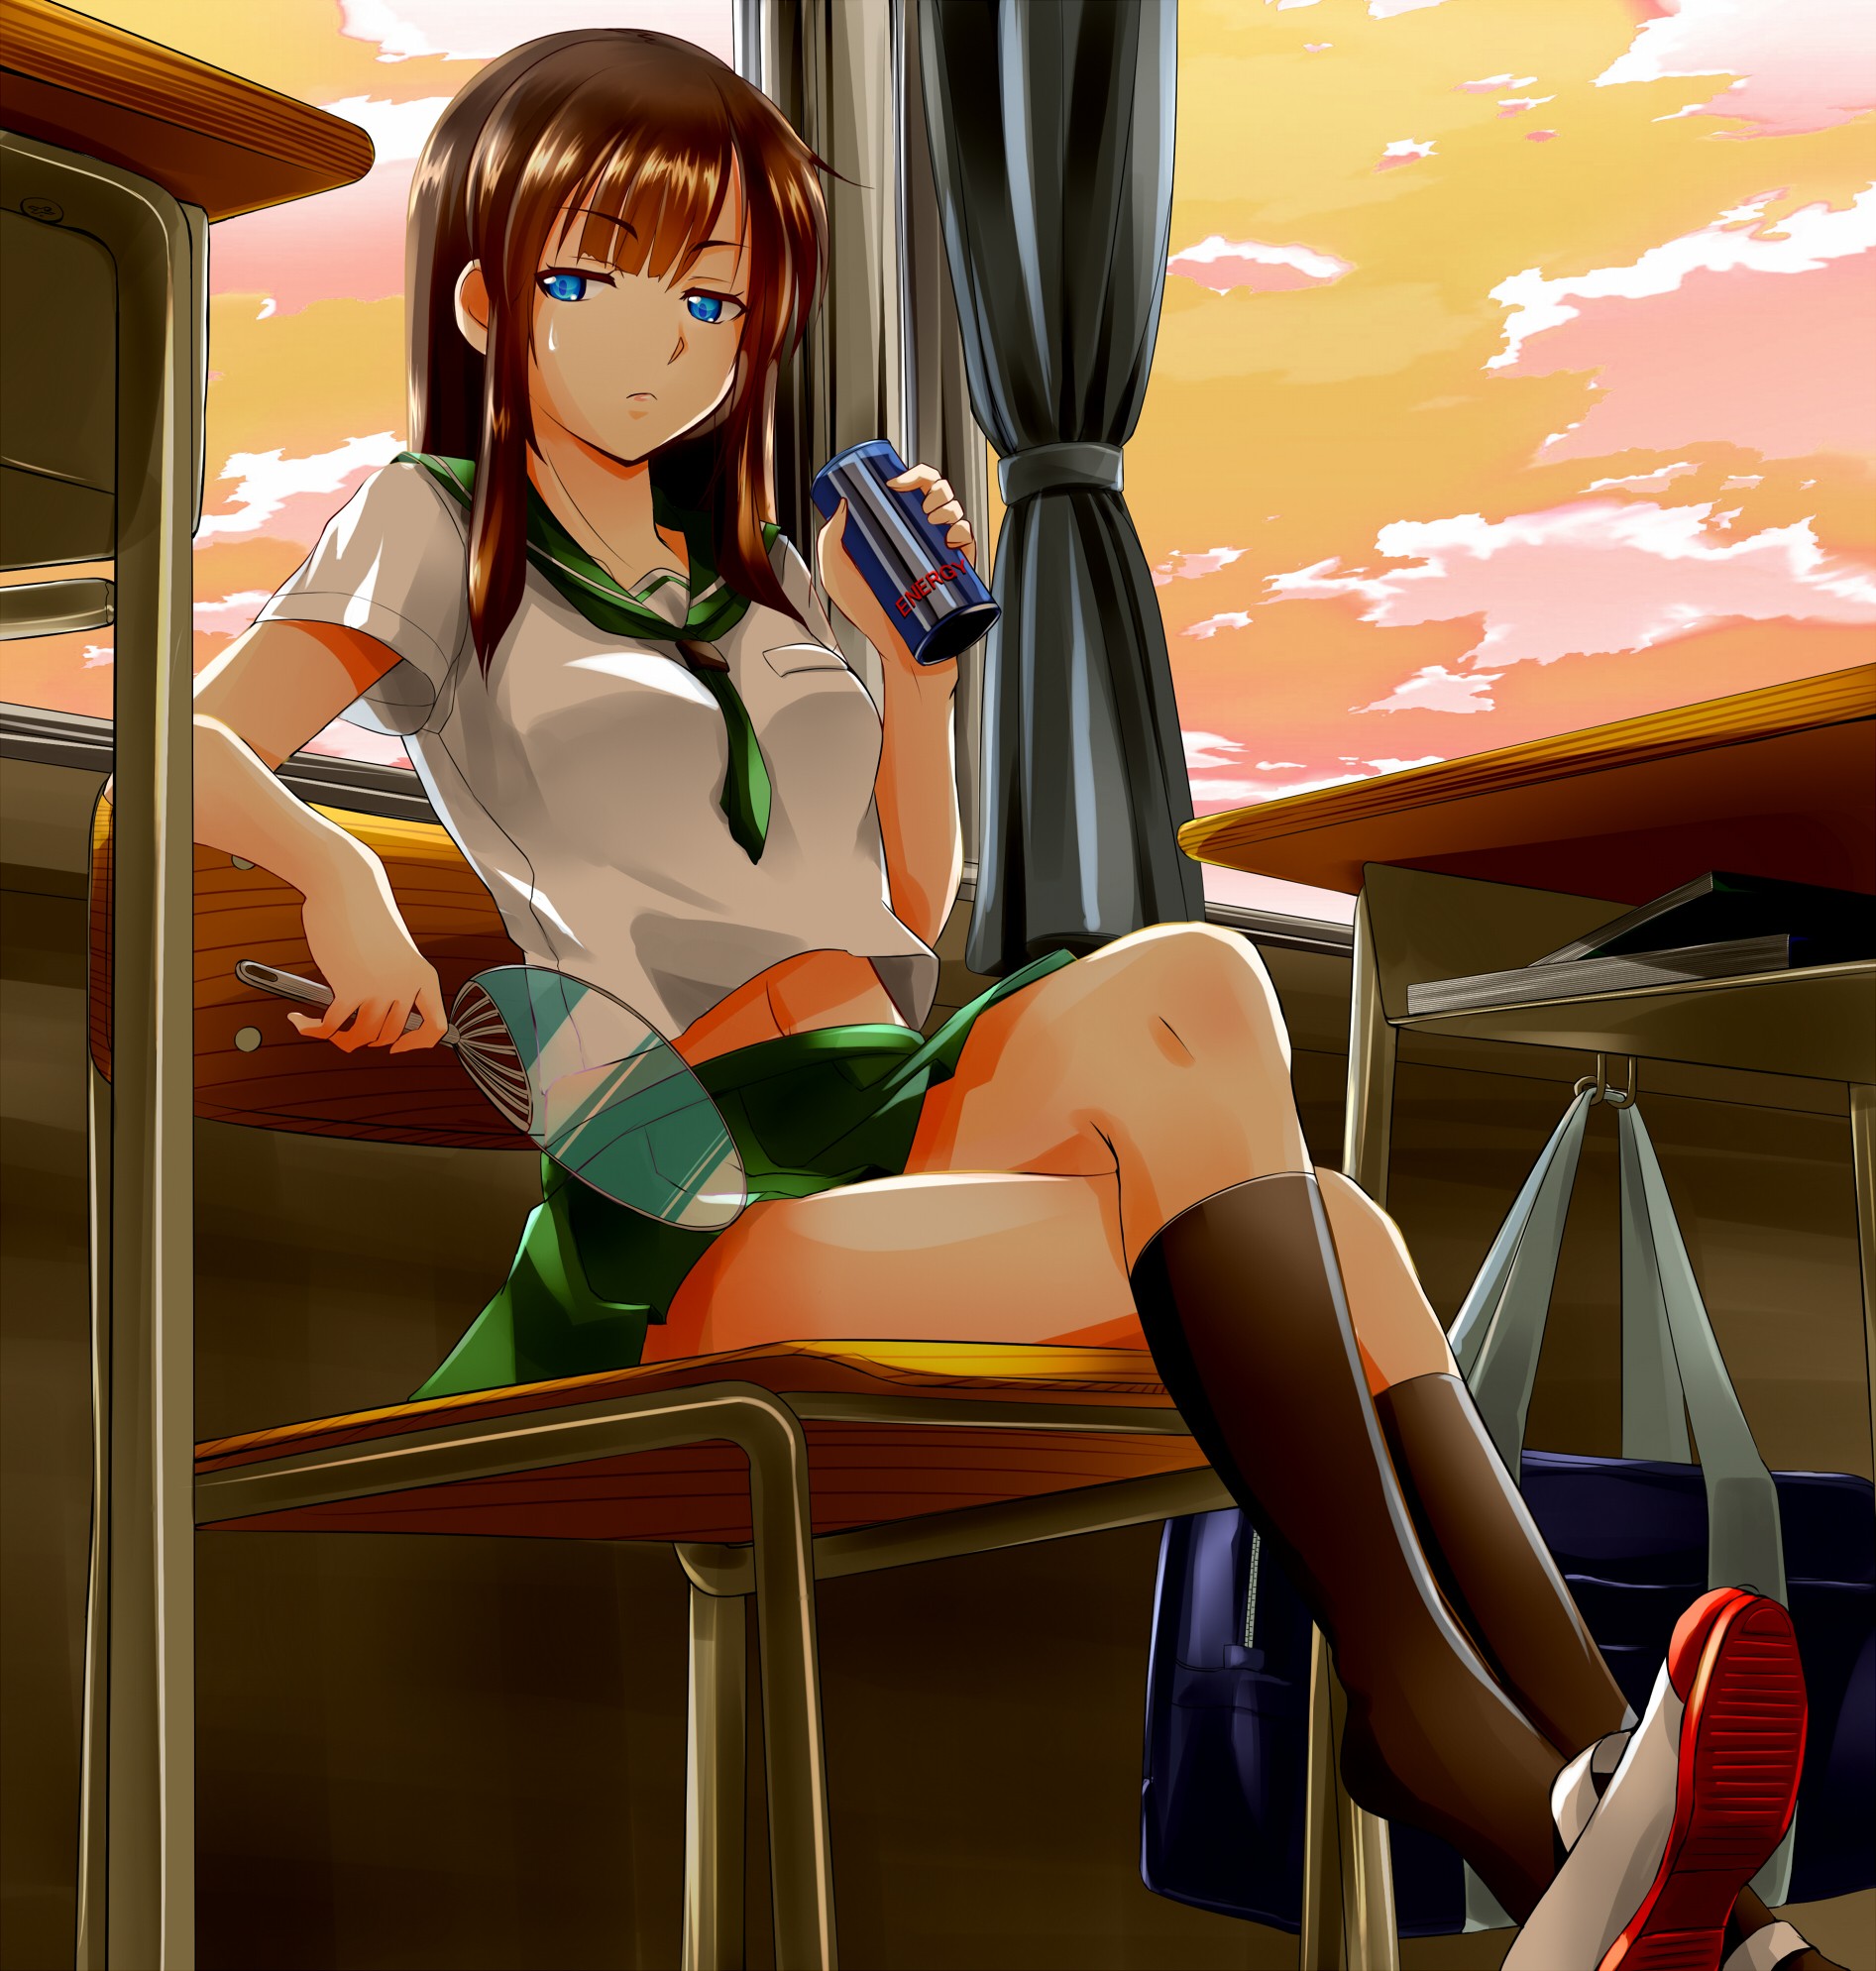 Long Hair Blue Eyes Legs Legs Crossed Sitting Looking Away Brunette Anime Anime Girls